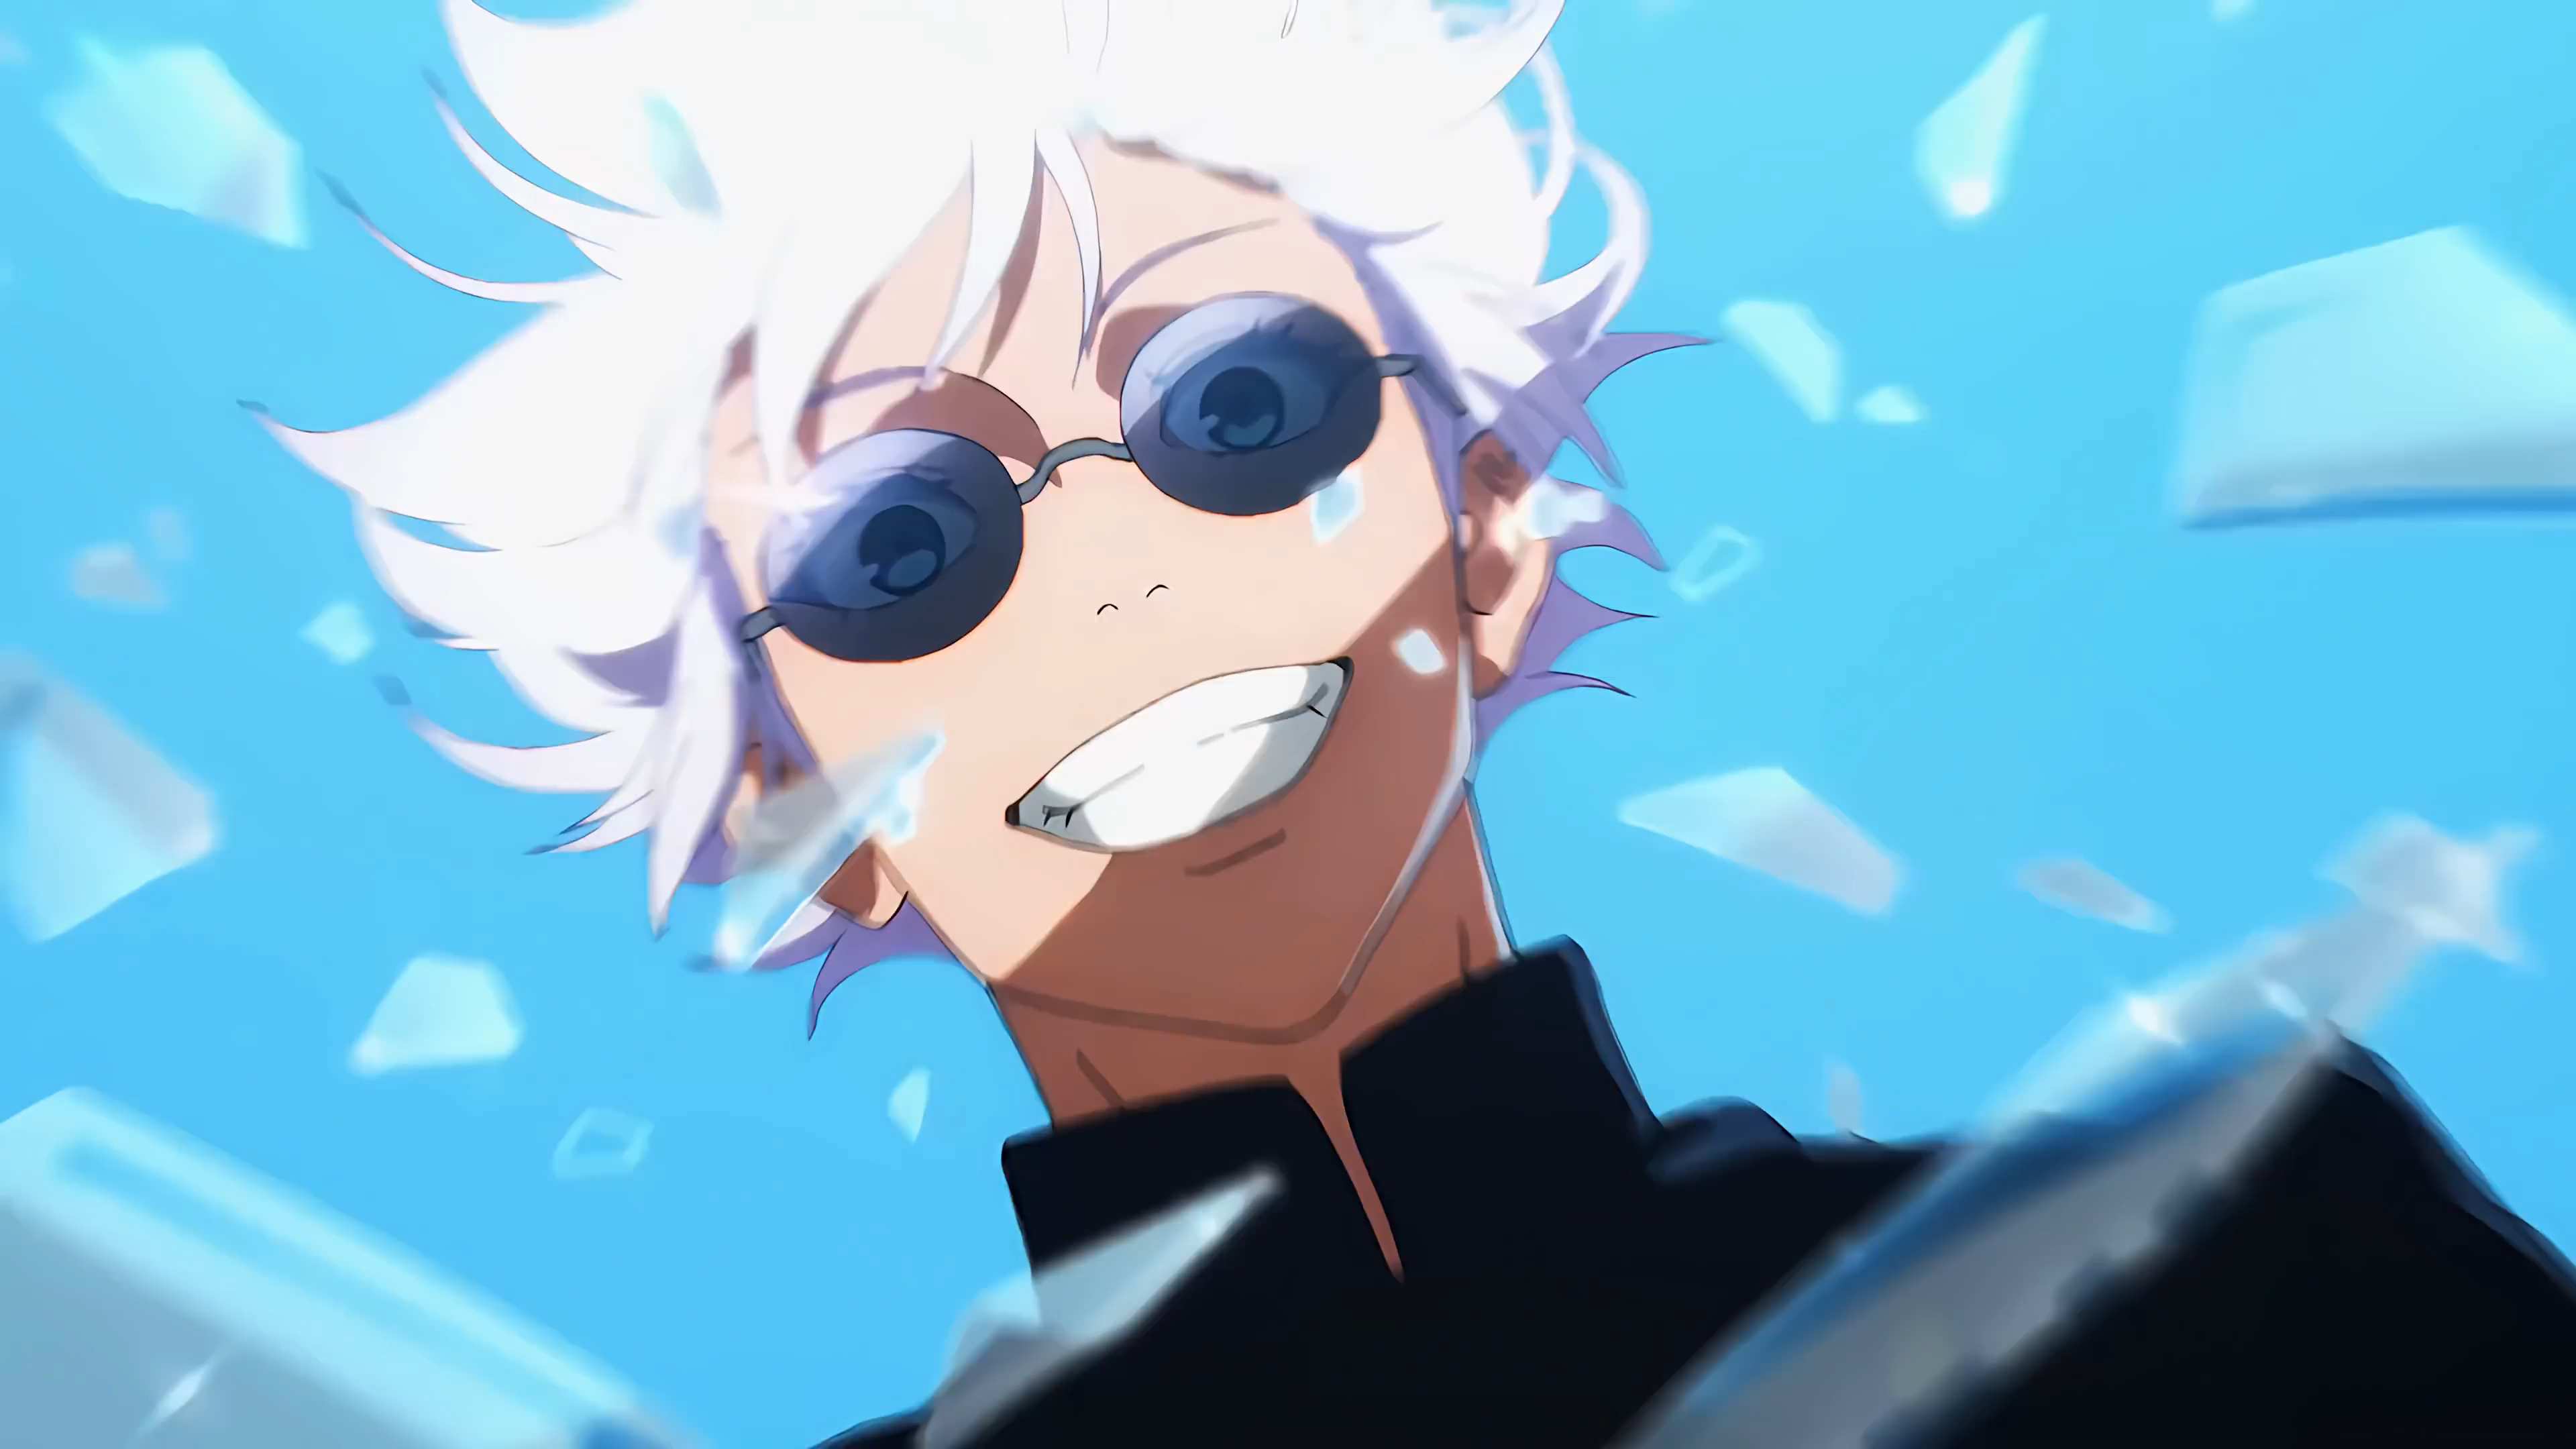 Anime 3840x2160 Jujutsu Kaisen Satoru Gojo anime anime screenshot anime boys smiling sunglasses sky broken glass teeth looking at viewer